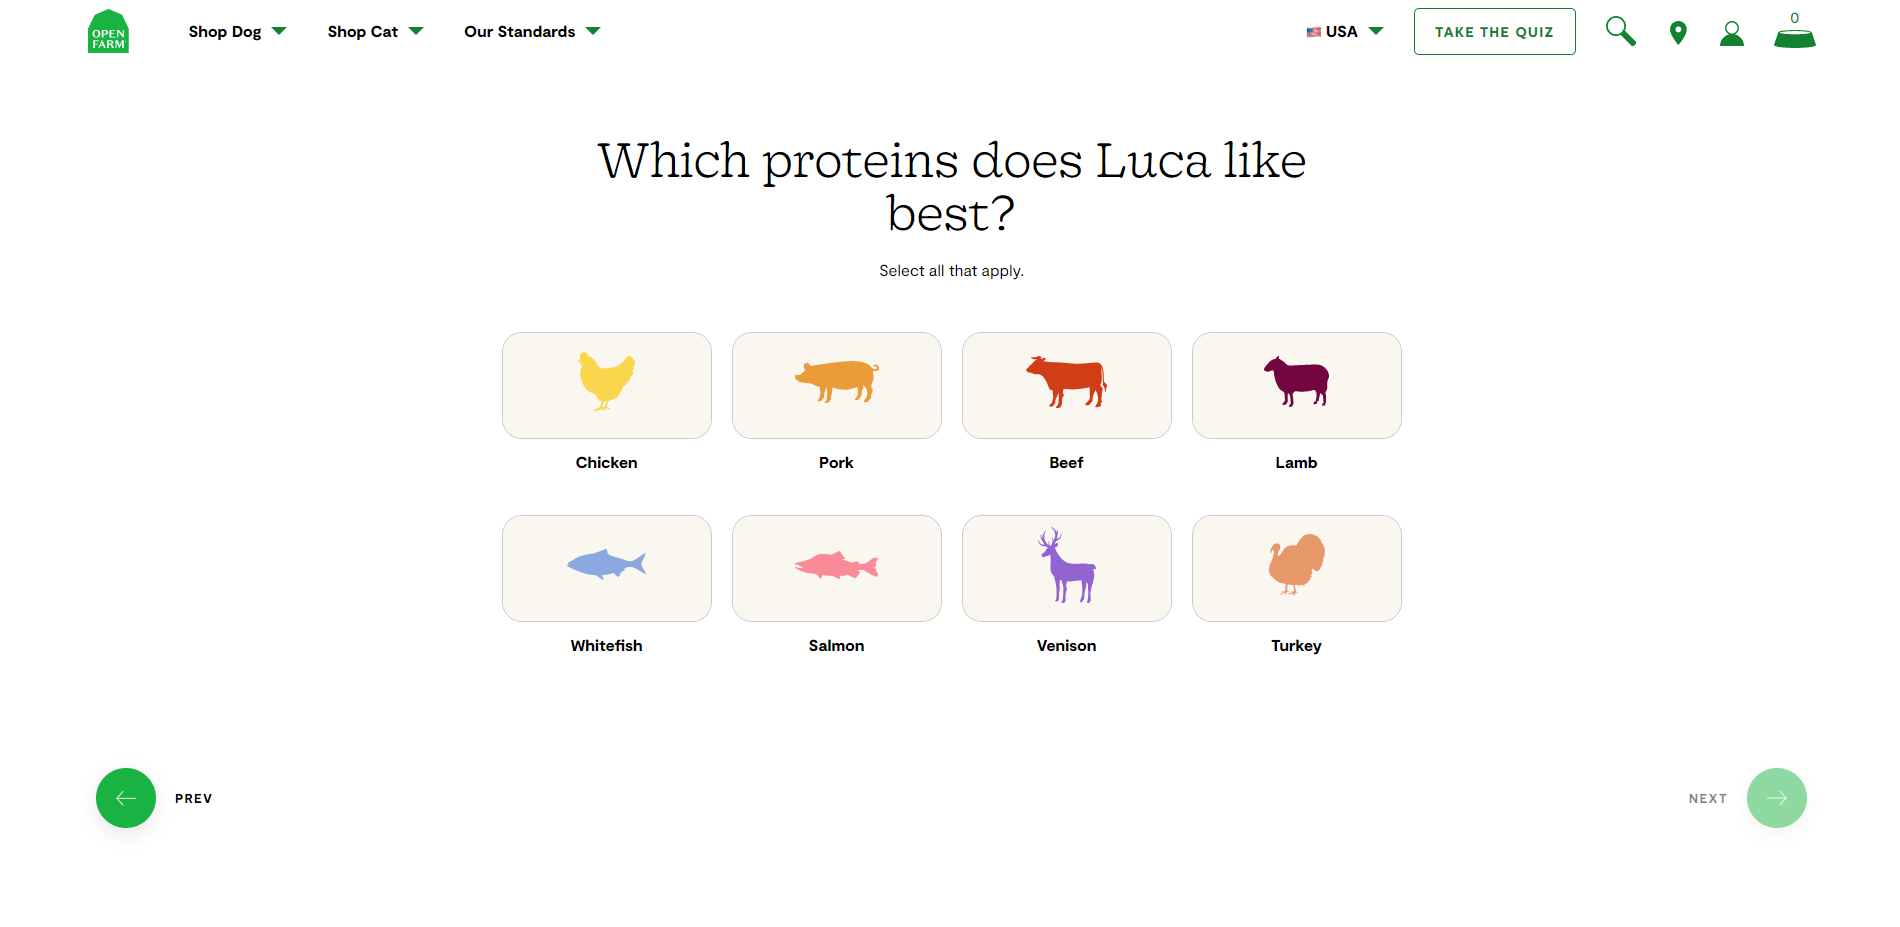 Choice of protein Open Farm